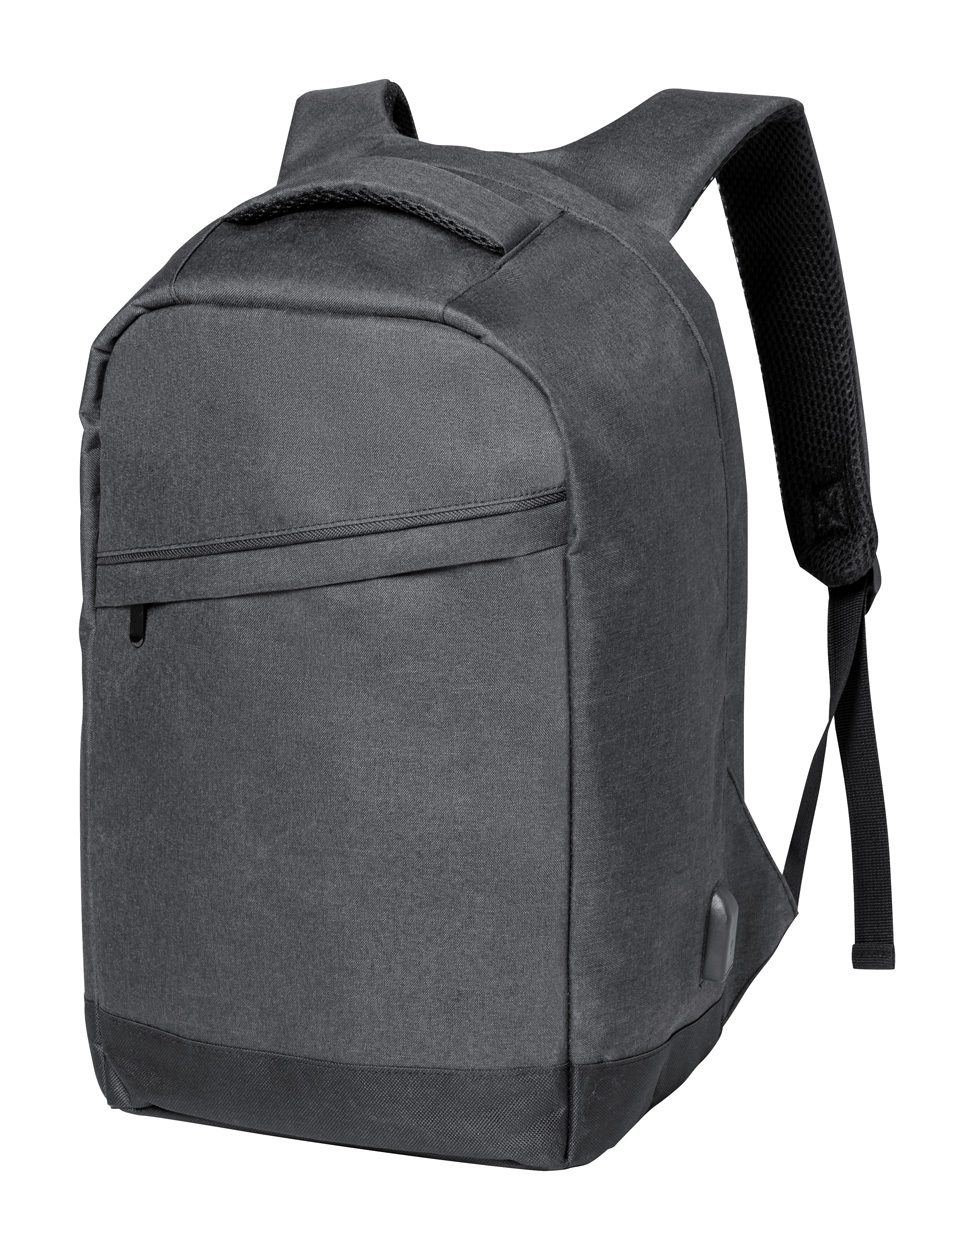 Frissa backpack - stone grey